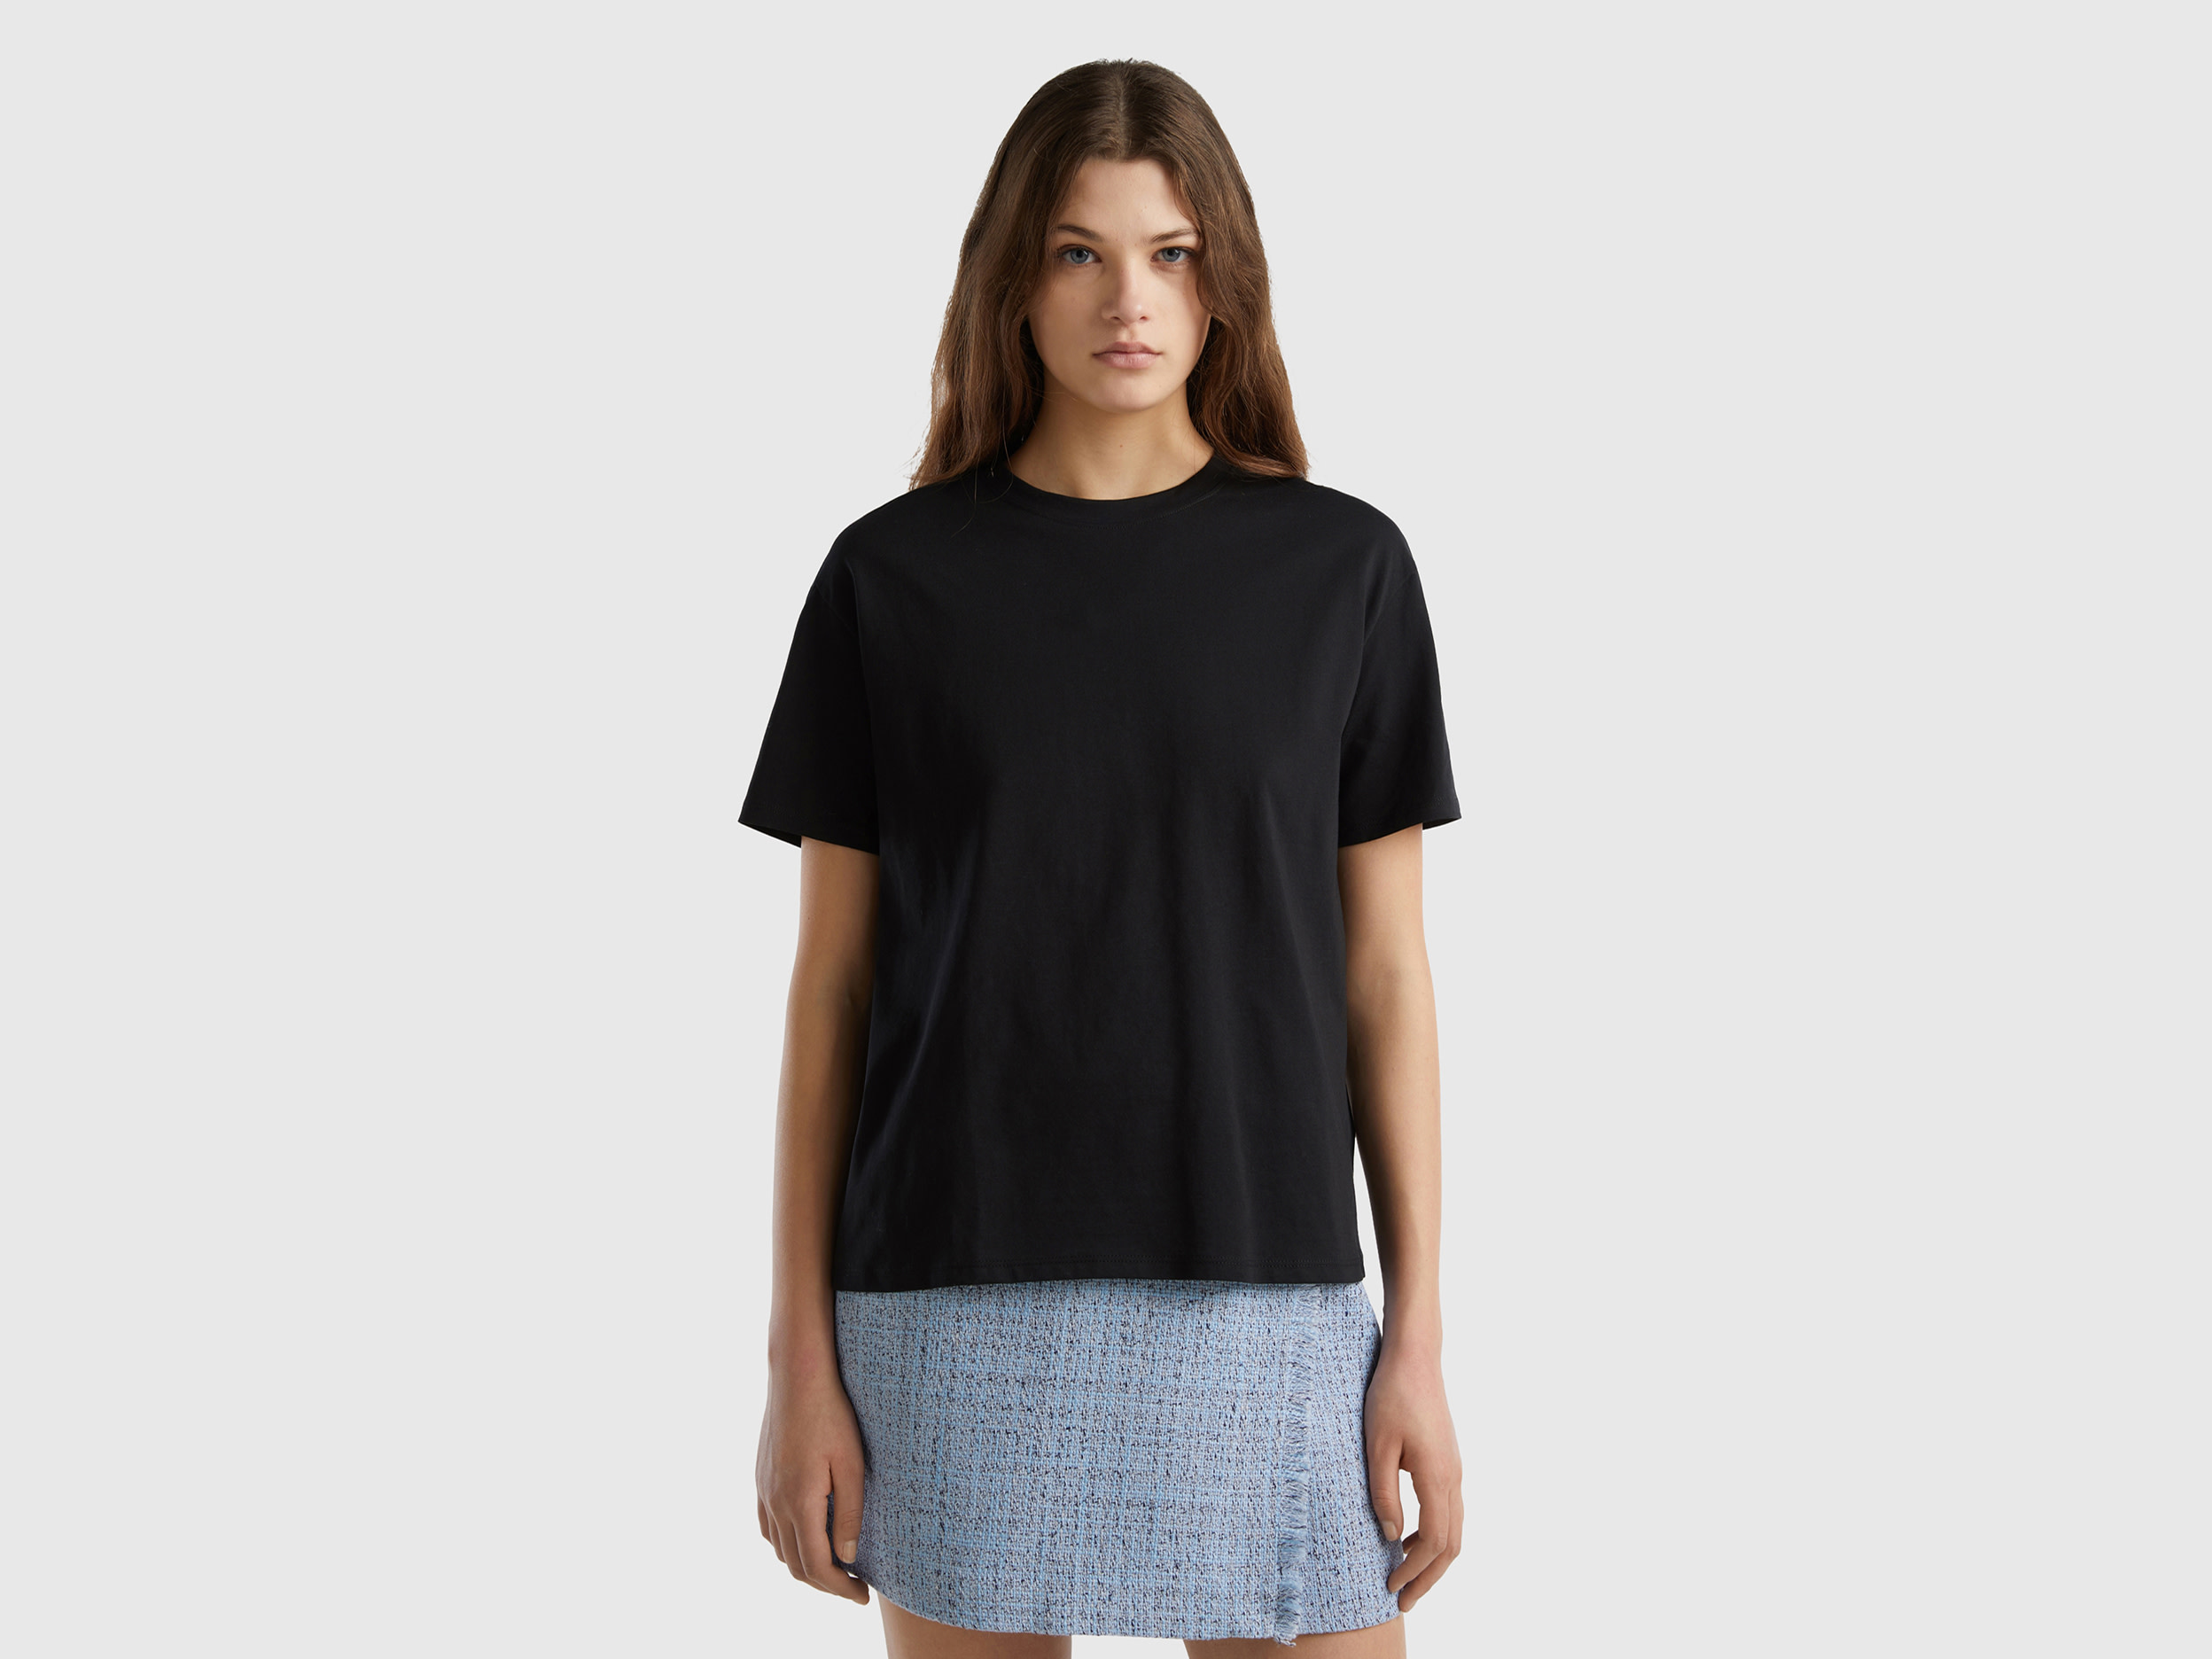 Benetton, Short Sleeve 100% Cotton T-shirt, size L, Black, Women